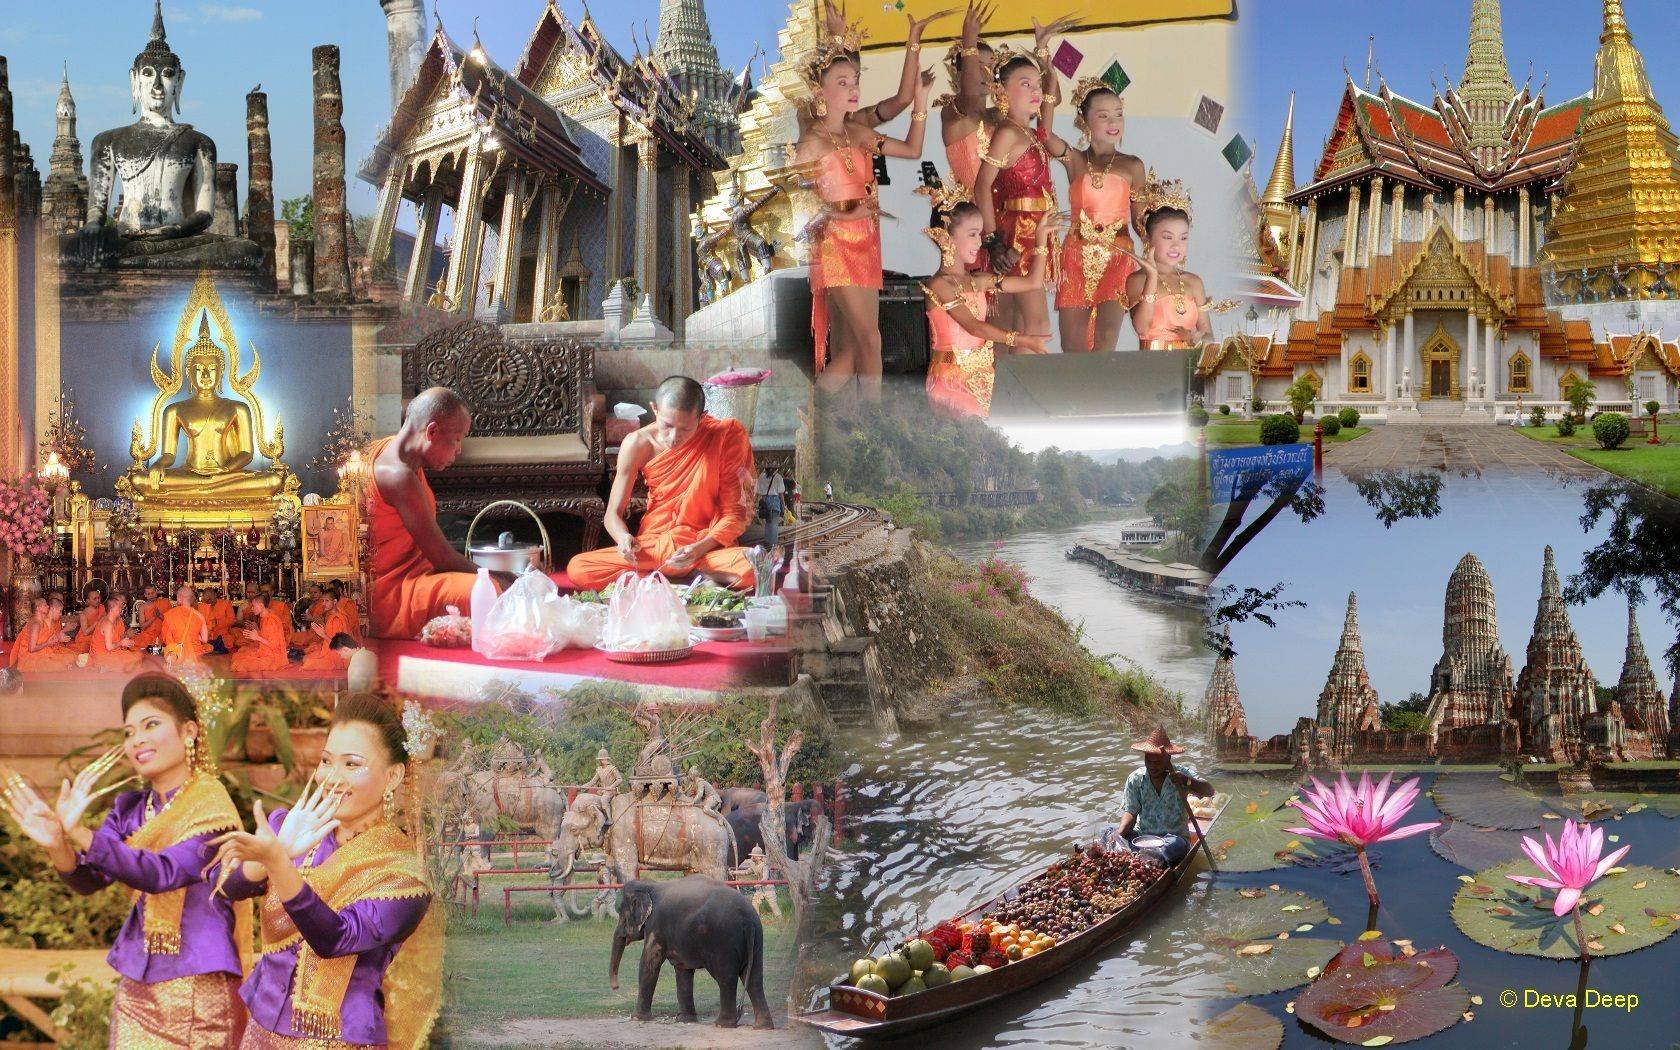 Asia tour. Таиланд (королевство Таиланд) Эстетик. Таиланд коллаж. Индия коллаж. Туризм в Азии.